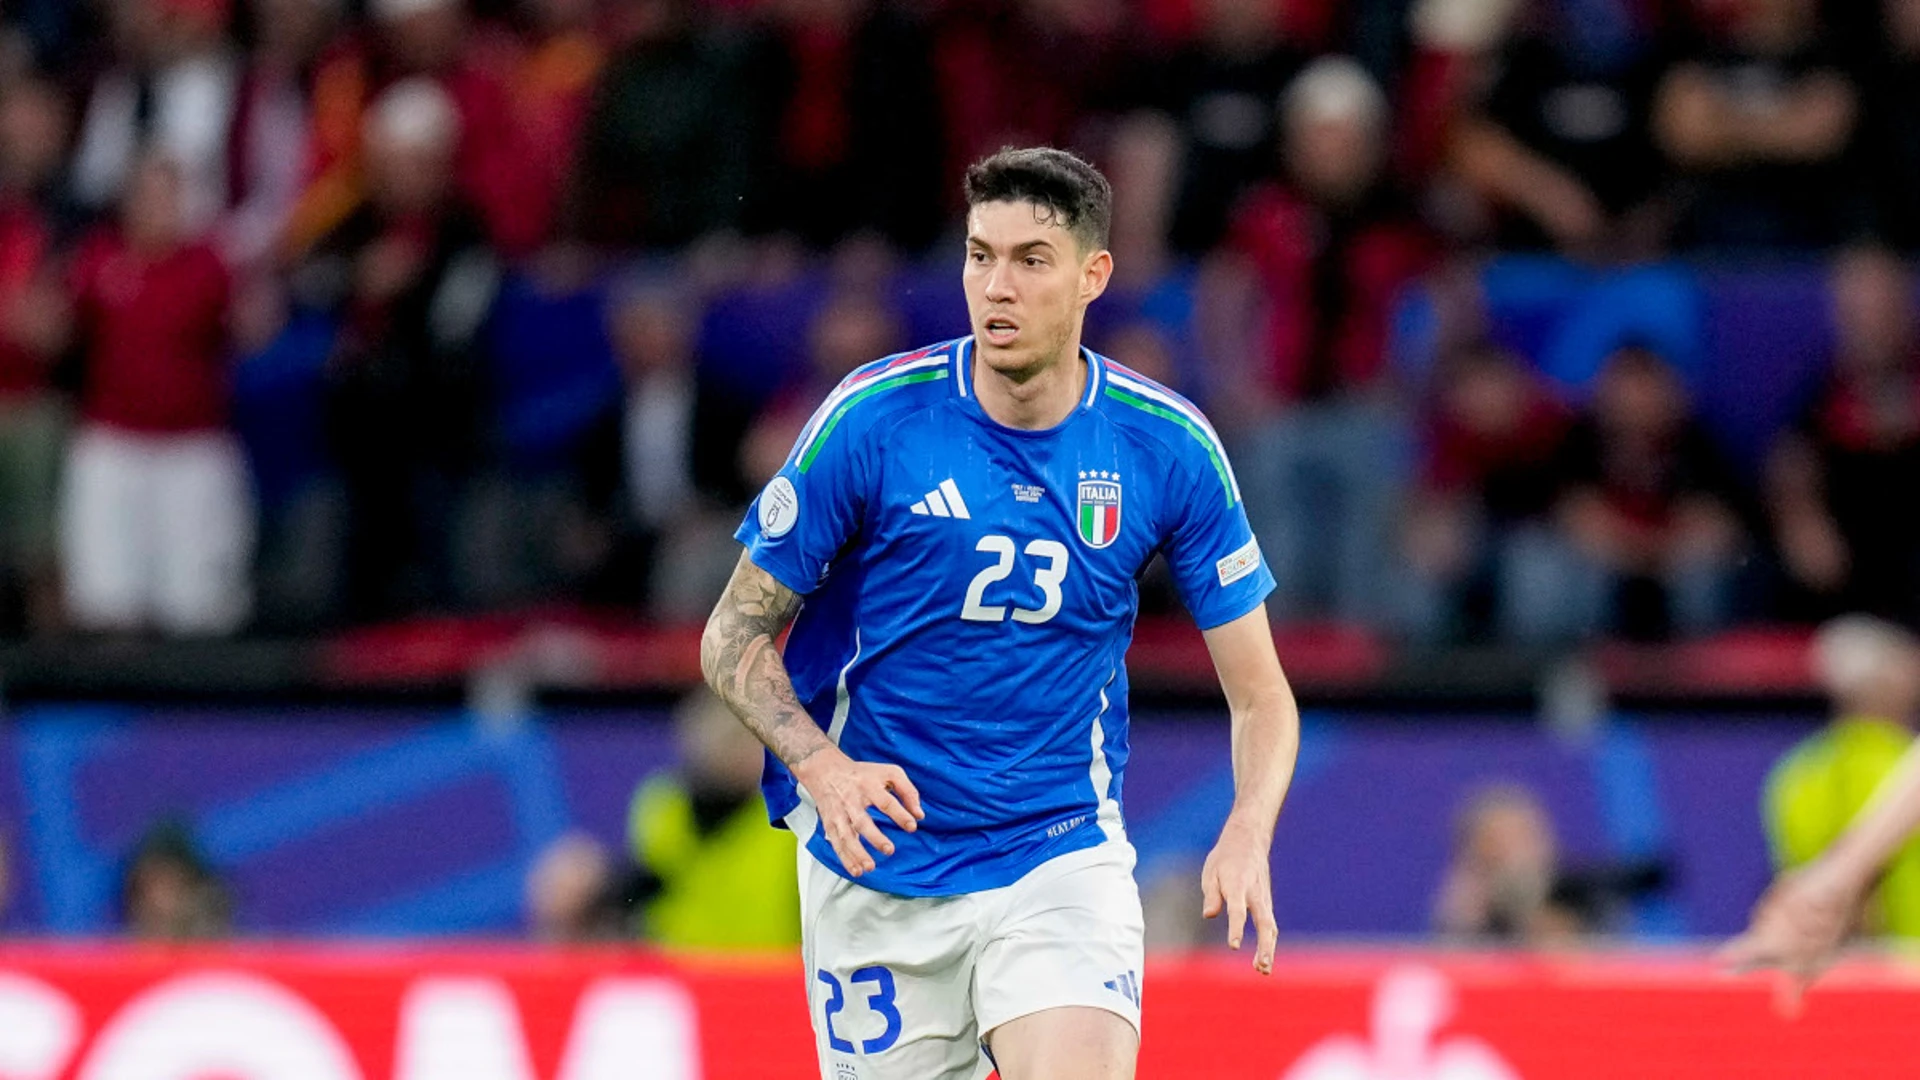 Italy do not fear Croatia ahead of crunch Euros match, says Bastoni